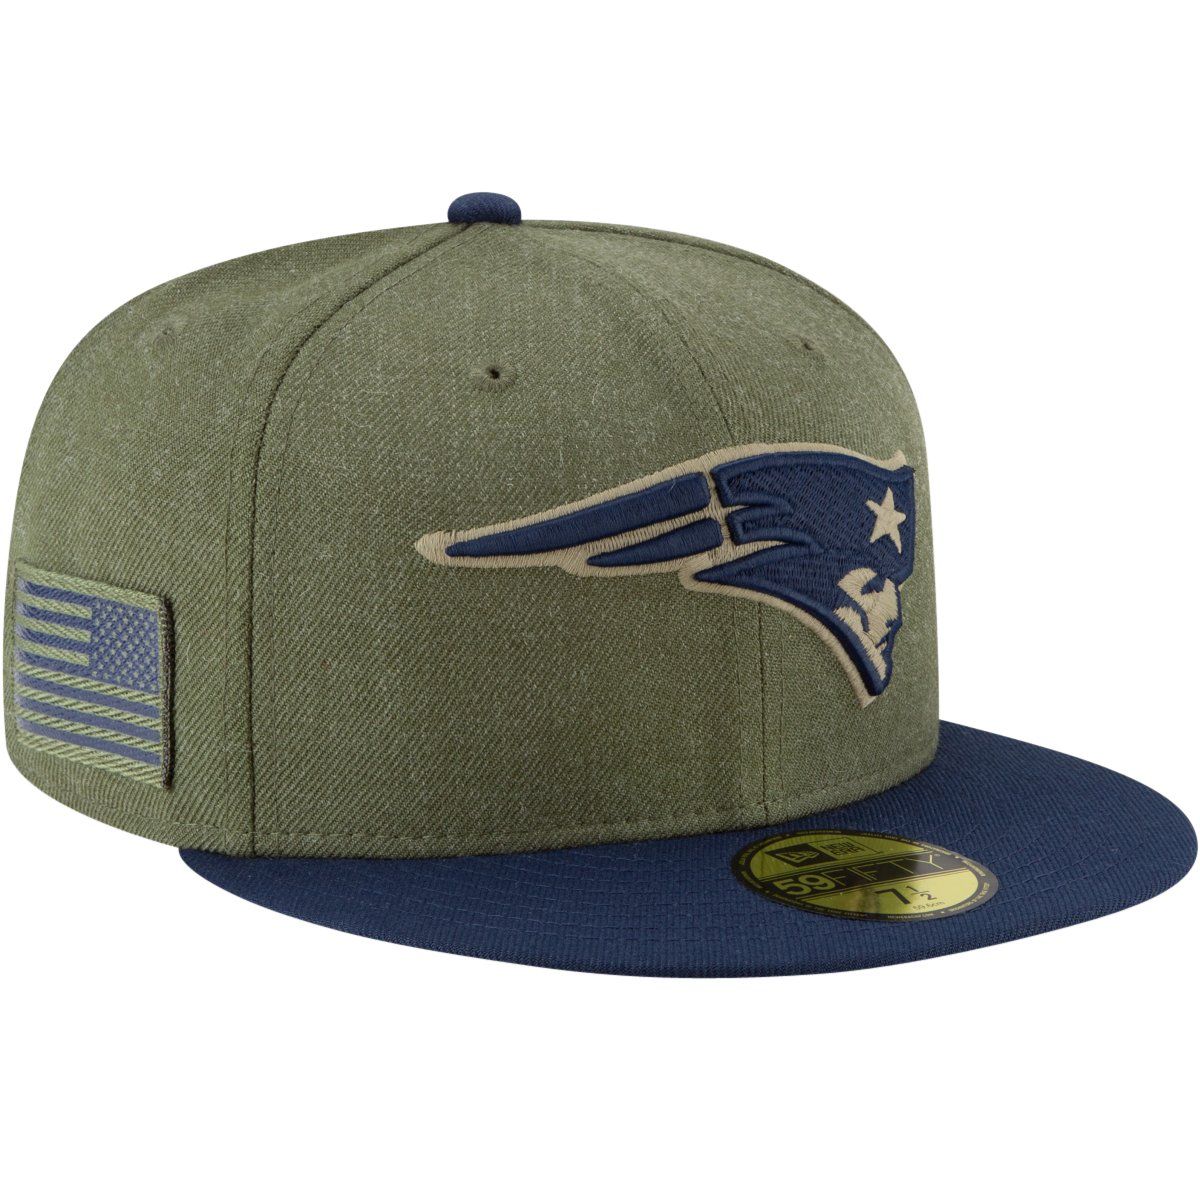 New Era 59Fifty Cap - Salute to Service New England Patriots